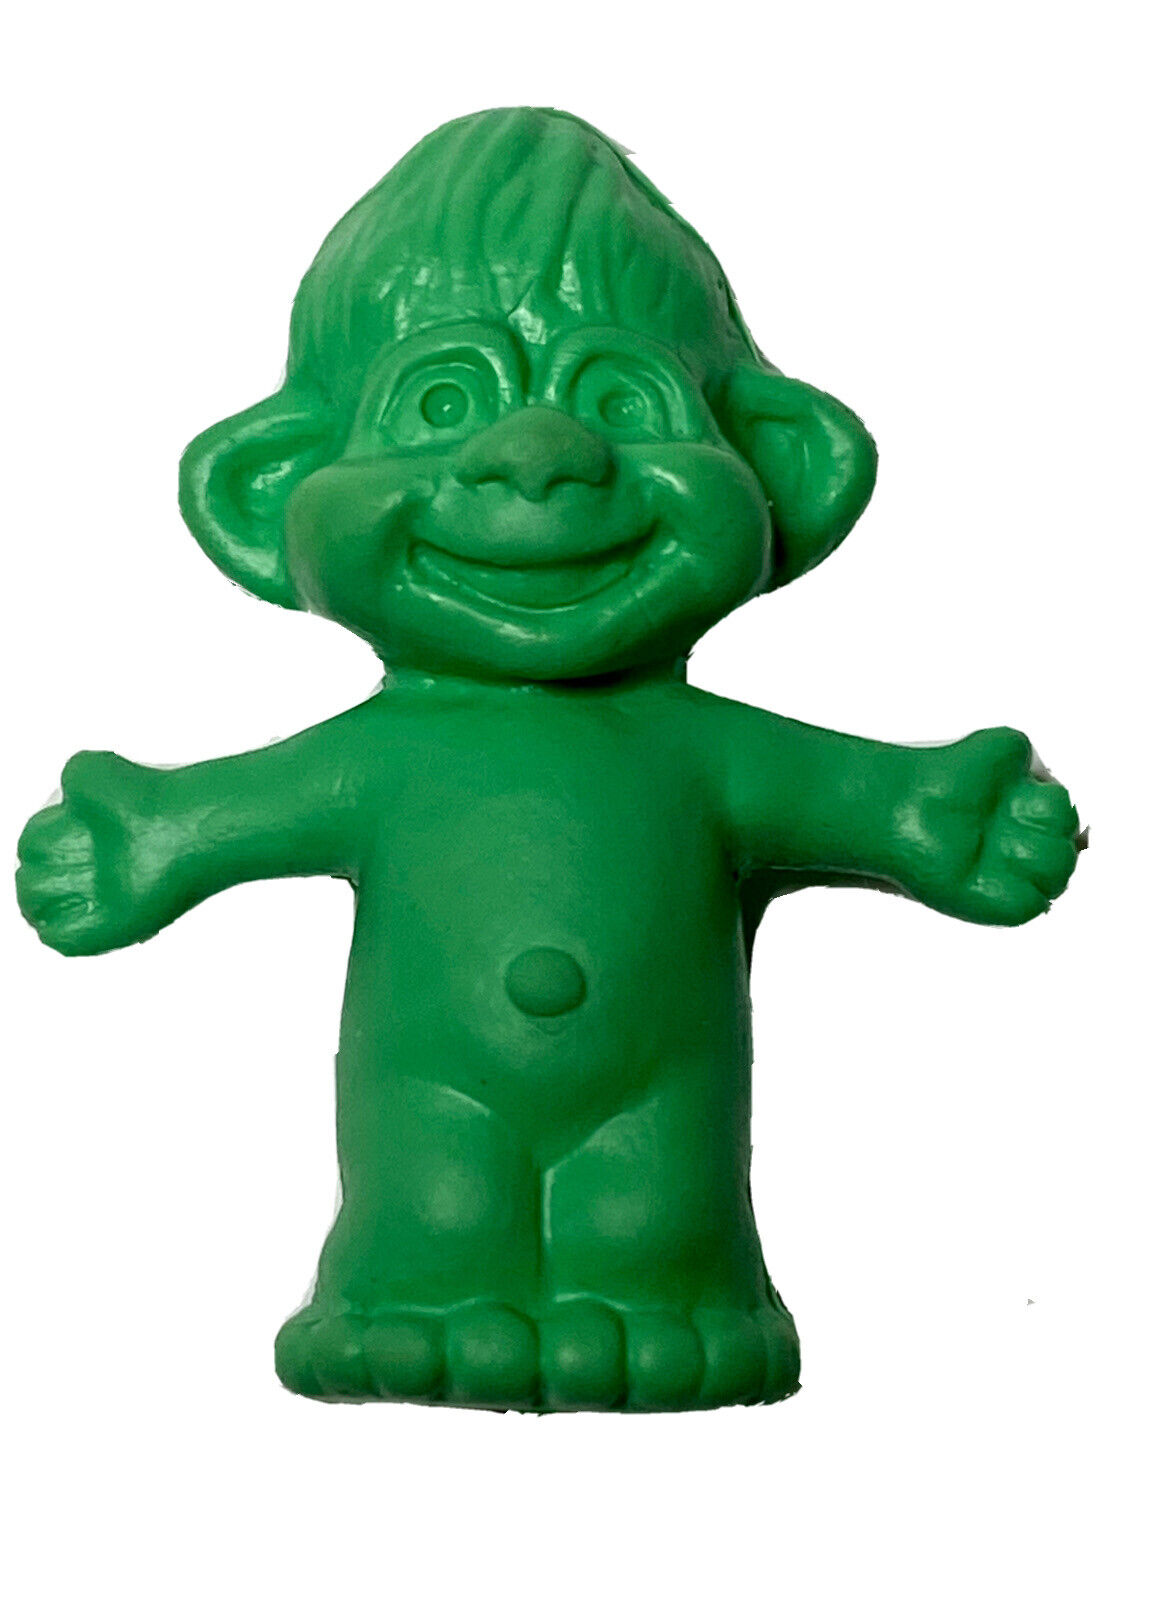 Vintage Diener Figural Treasure Troll Rubber Pencil Top Topper Eraser Green 1992